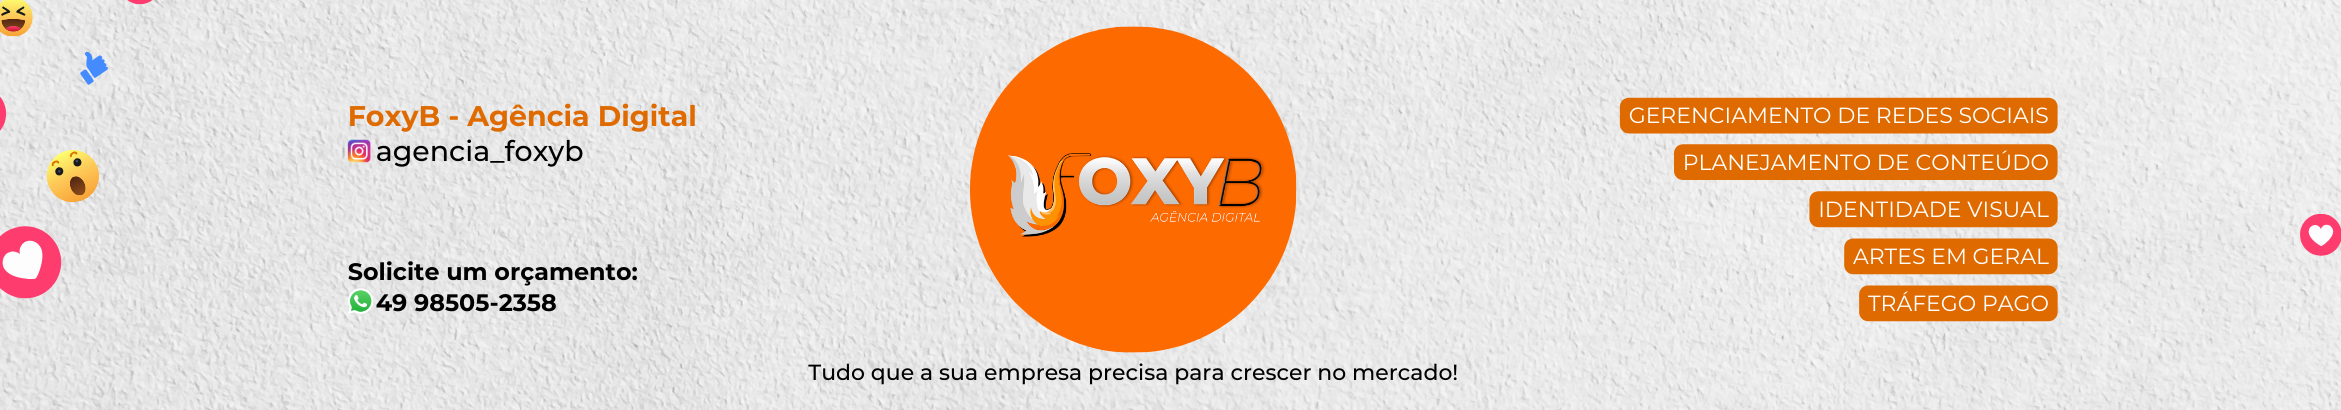 FoxyB Agência Digitals profilbanner